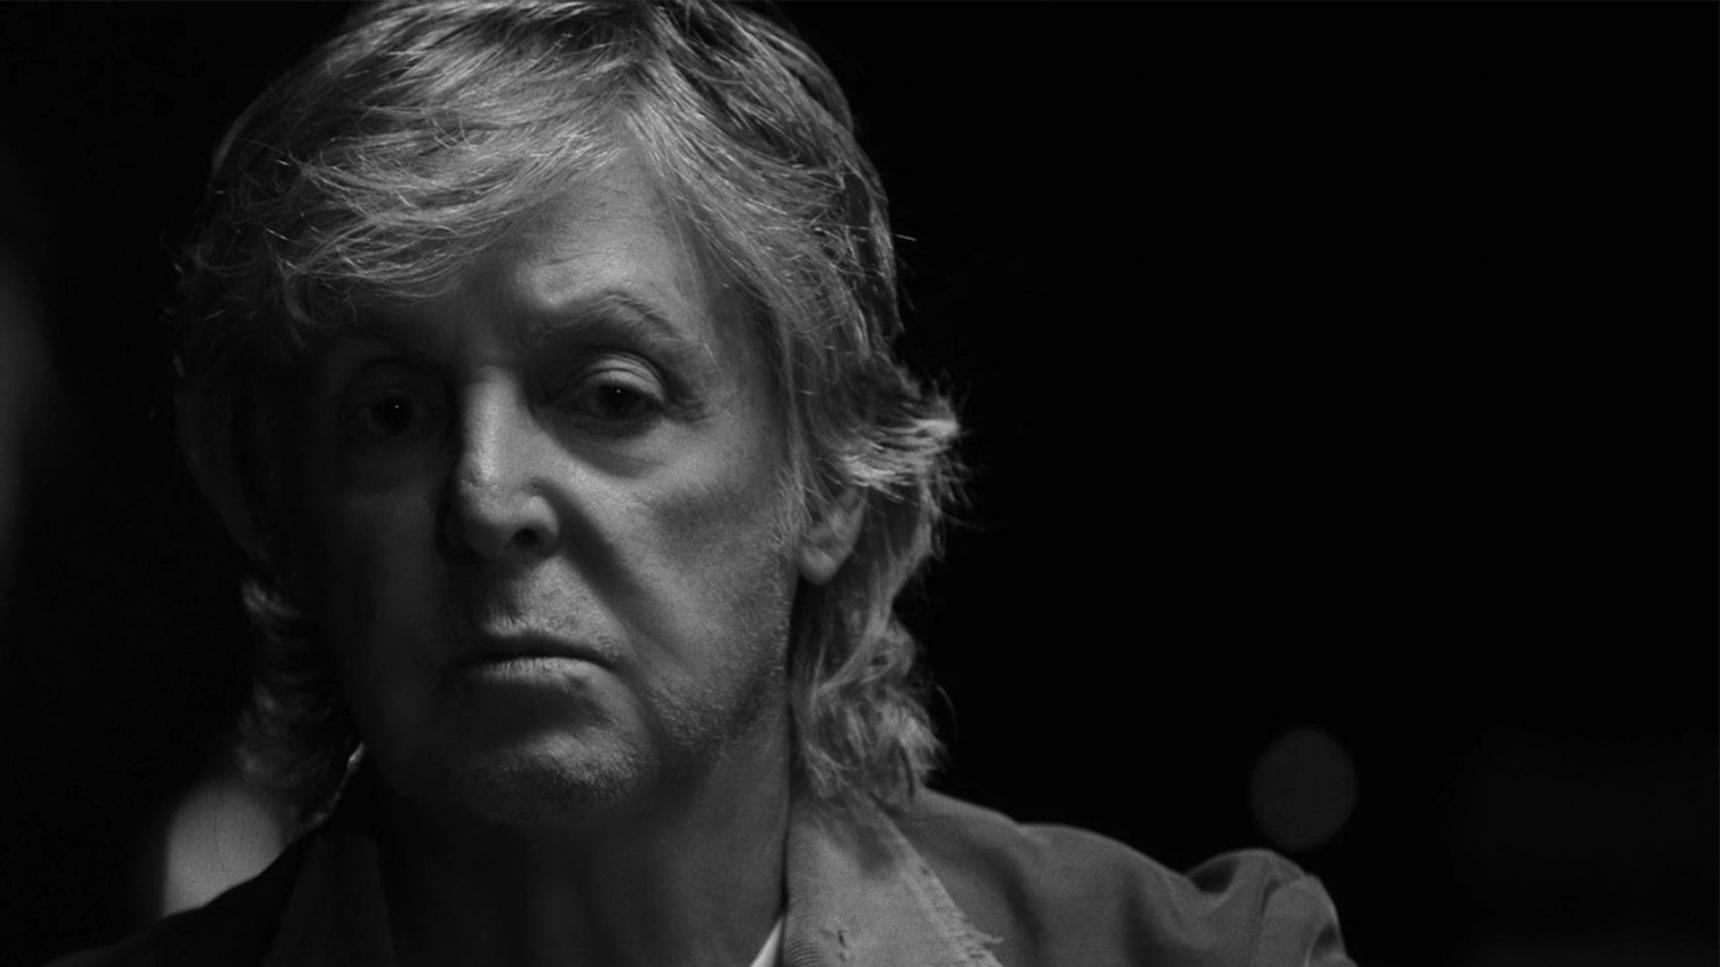 Poster del episodio 1 de McCartney 3, 2, 1 online